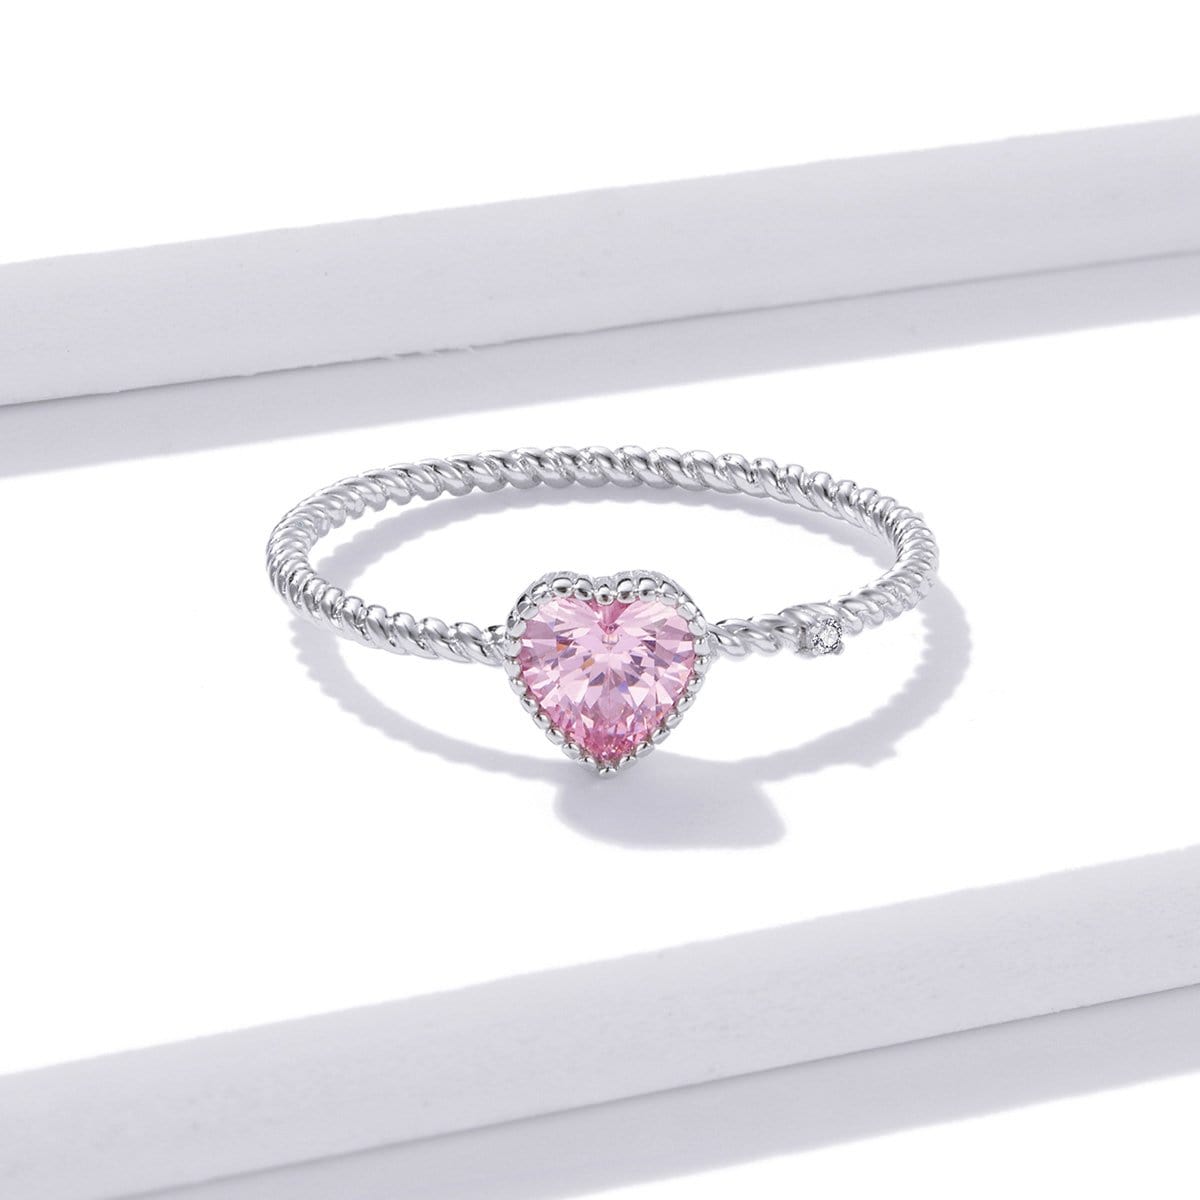 Pink Heart Ring - The Silver Goose SA